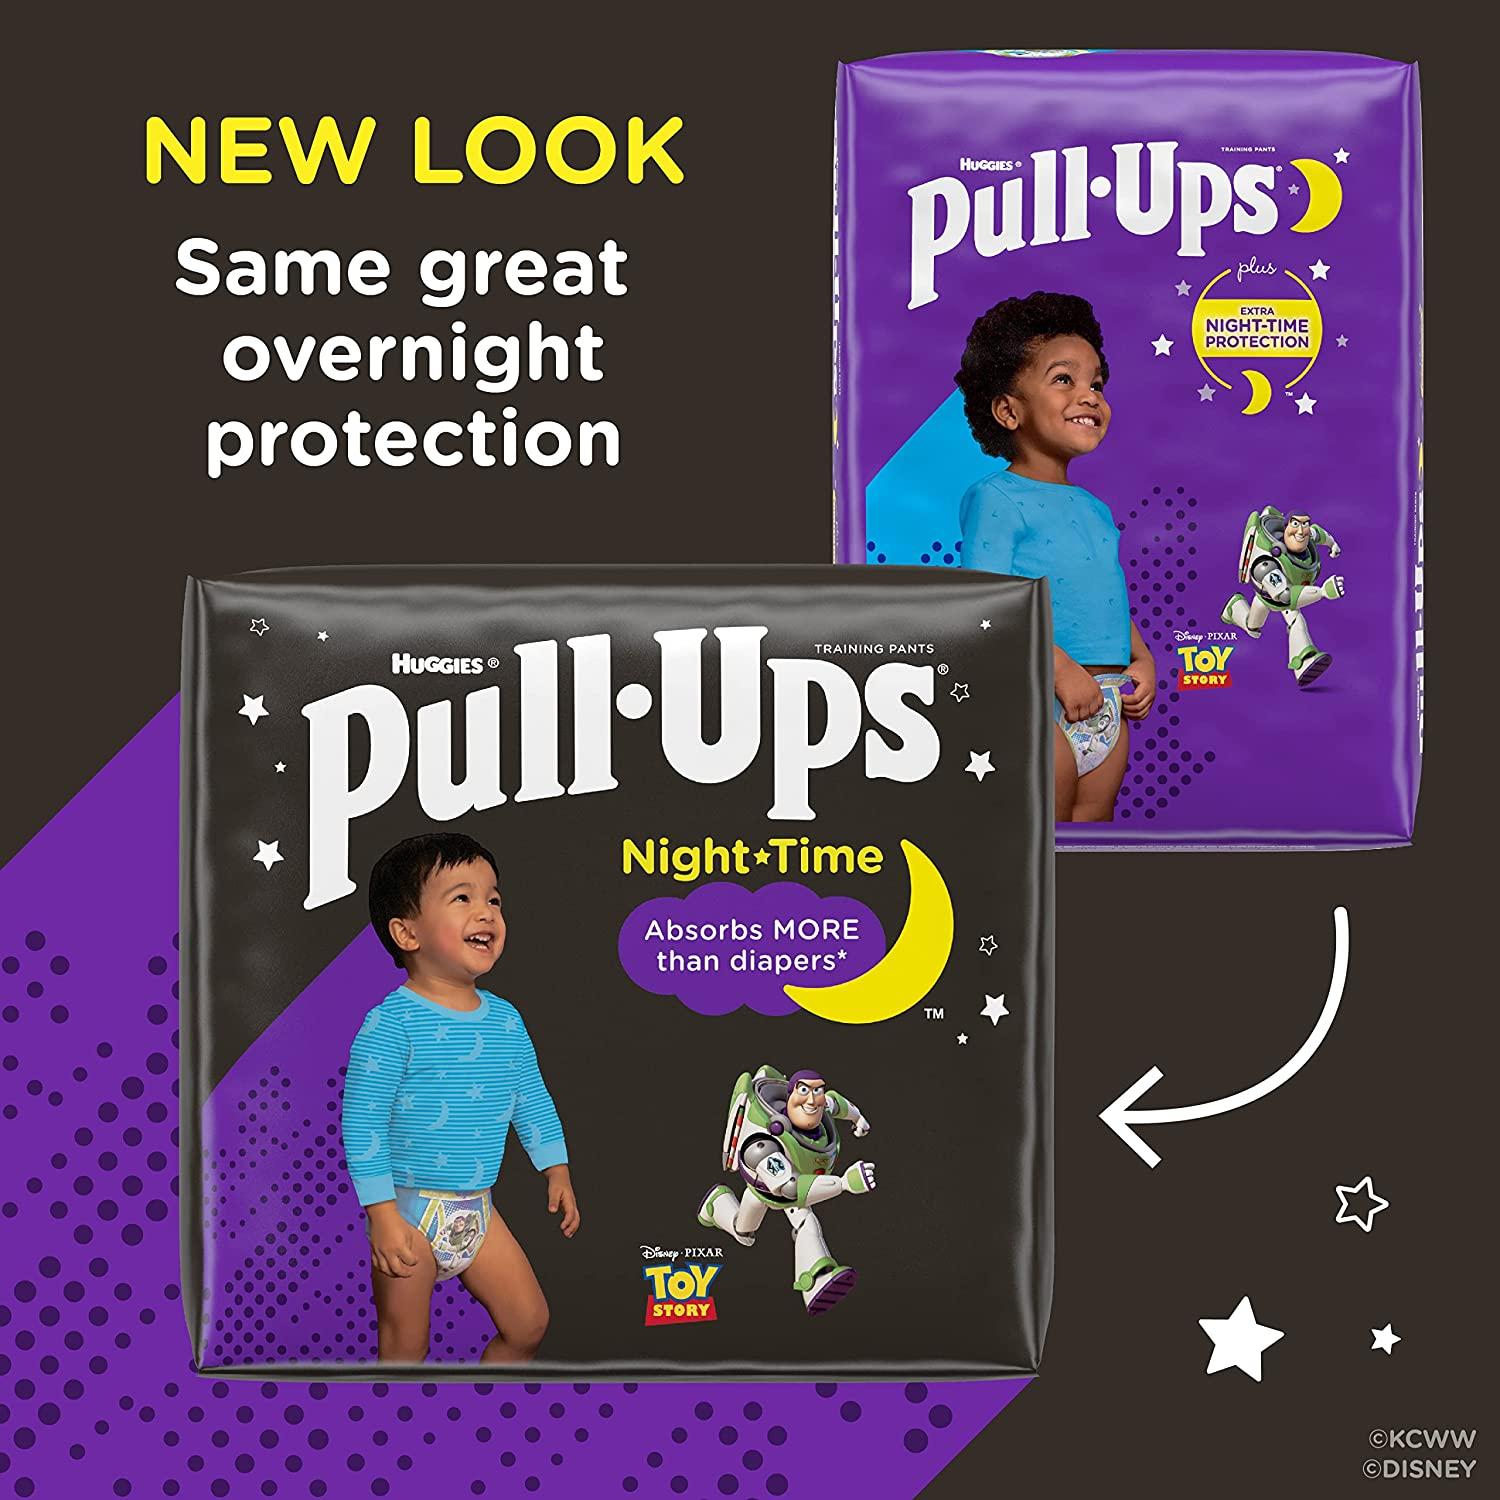 Pull-Ups Training Pants, Disney Pixar Toy Story, 3T-4T (32-40 lbs